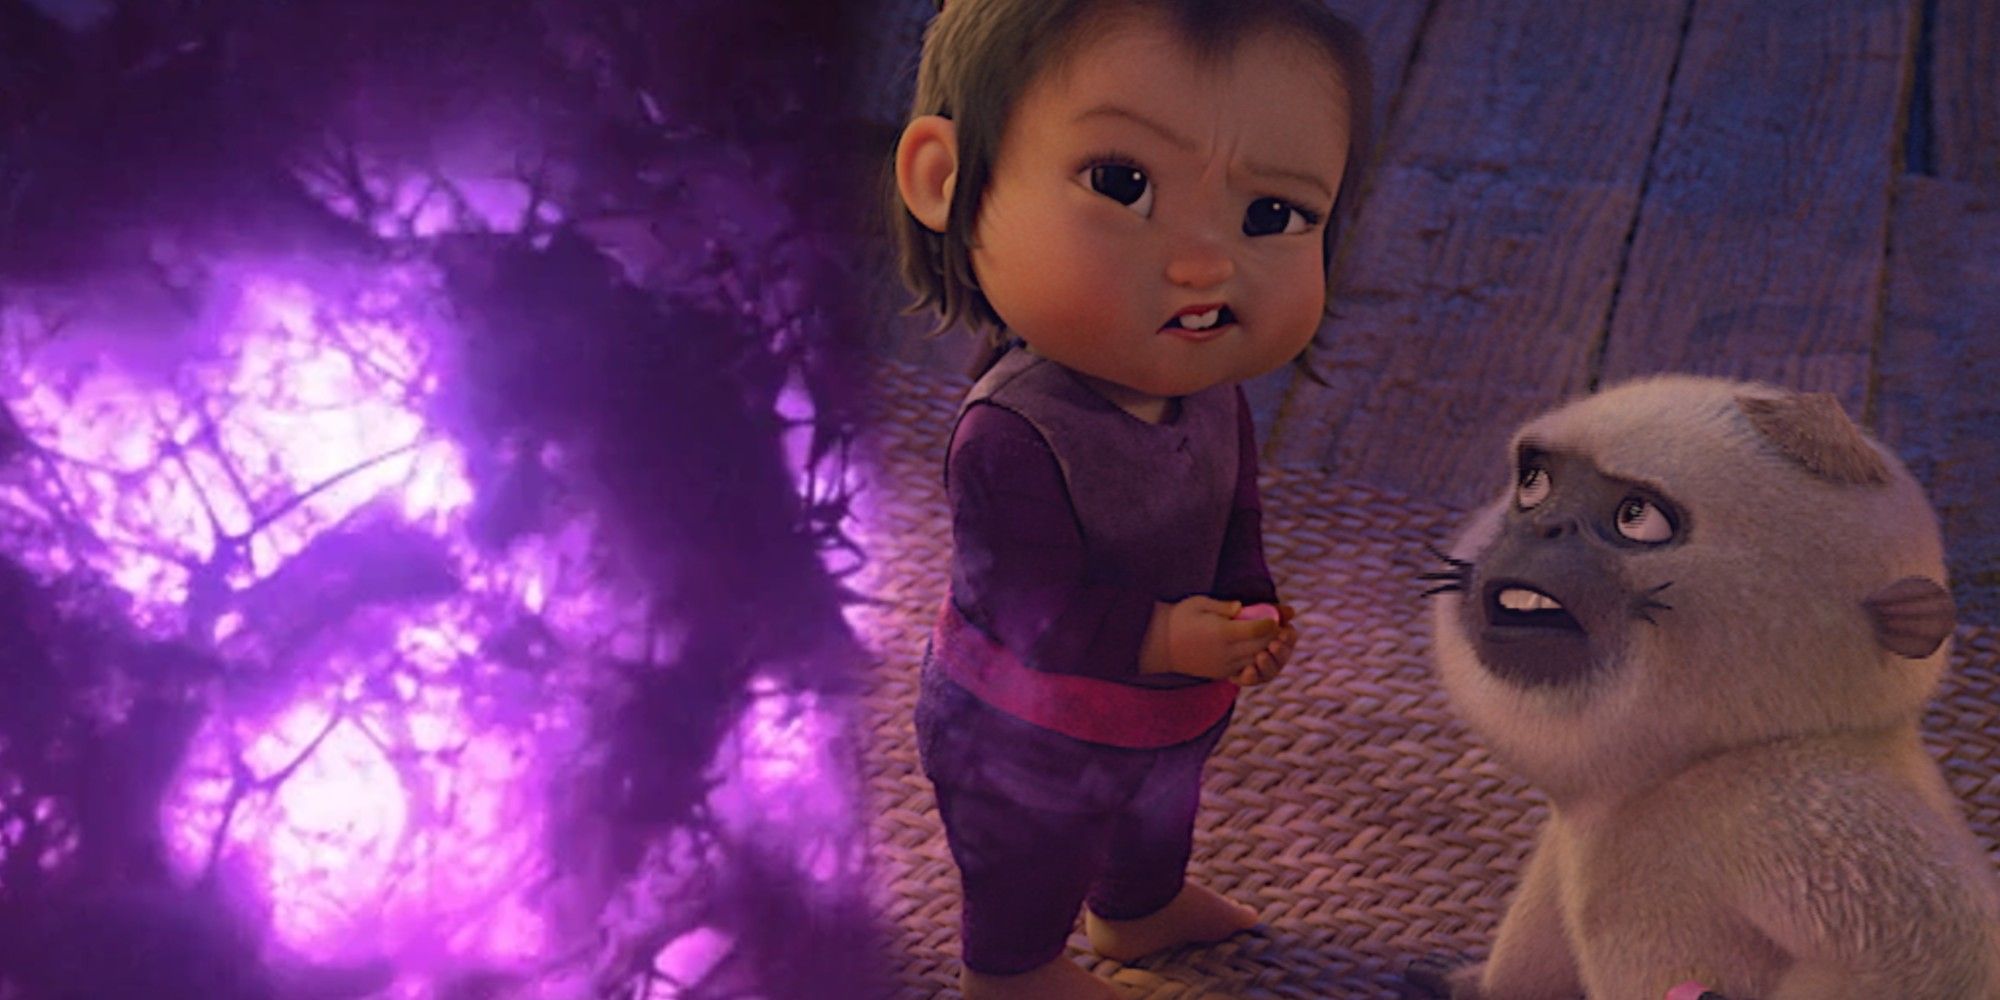 Raya and the Last Dragon trailer reveals Disney movie's con-baby